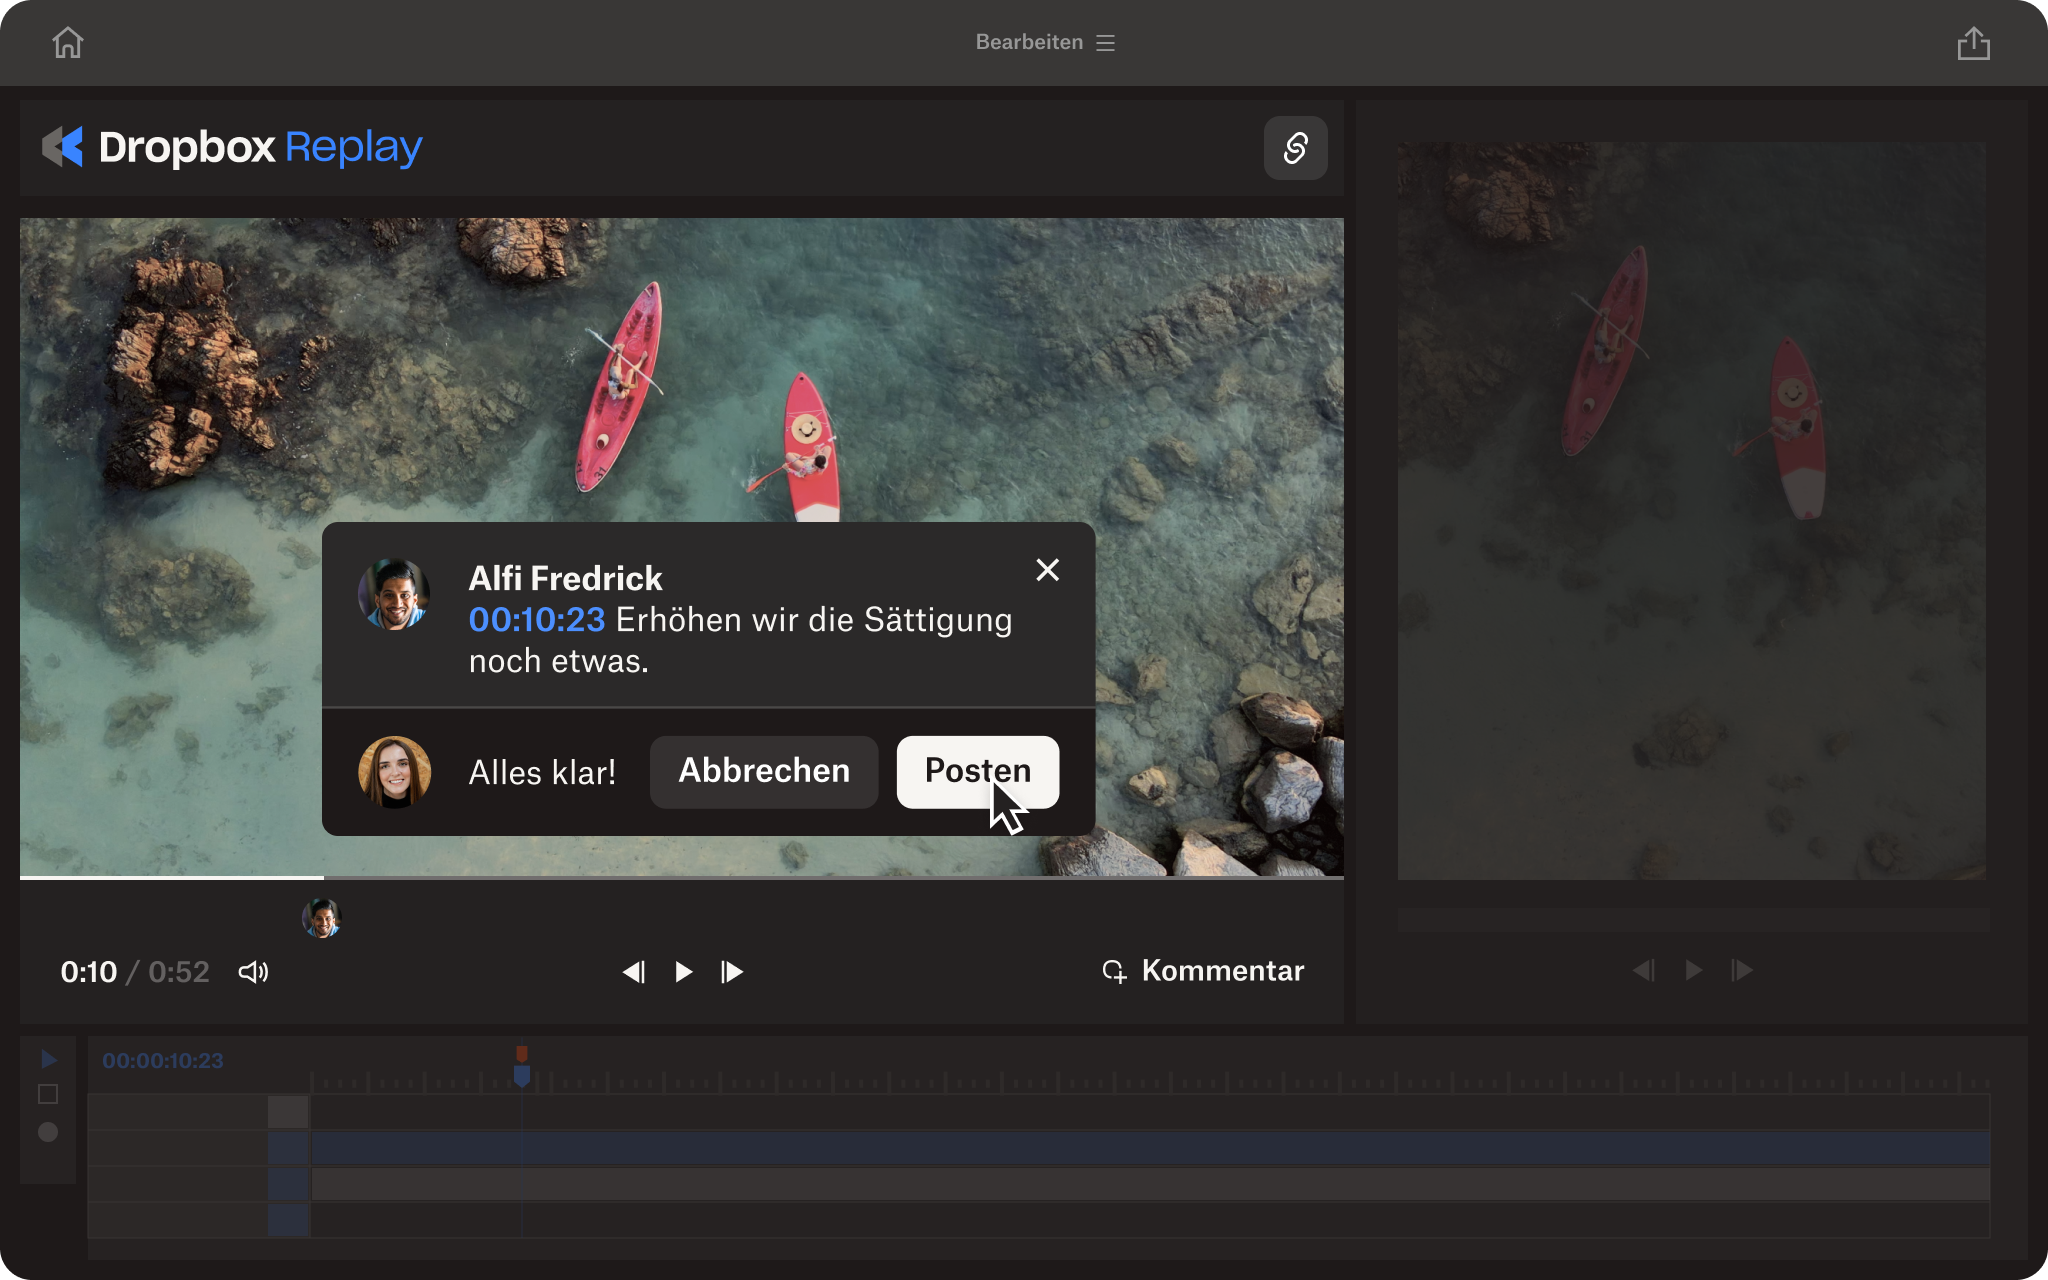 Dropbox Replay Bildschirm mit Live-Review